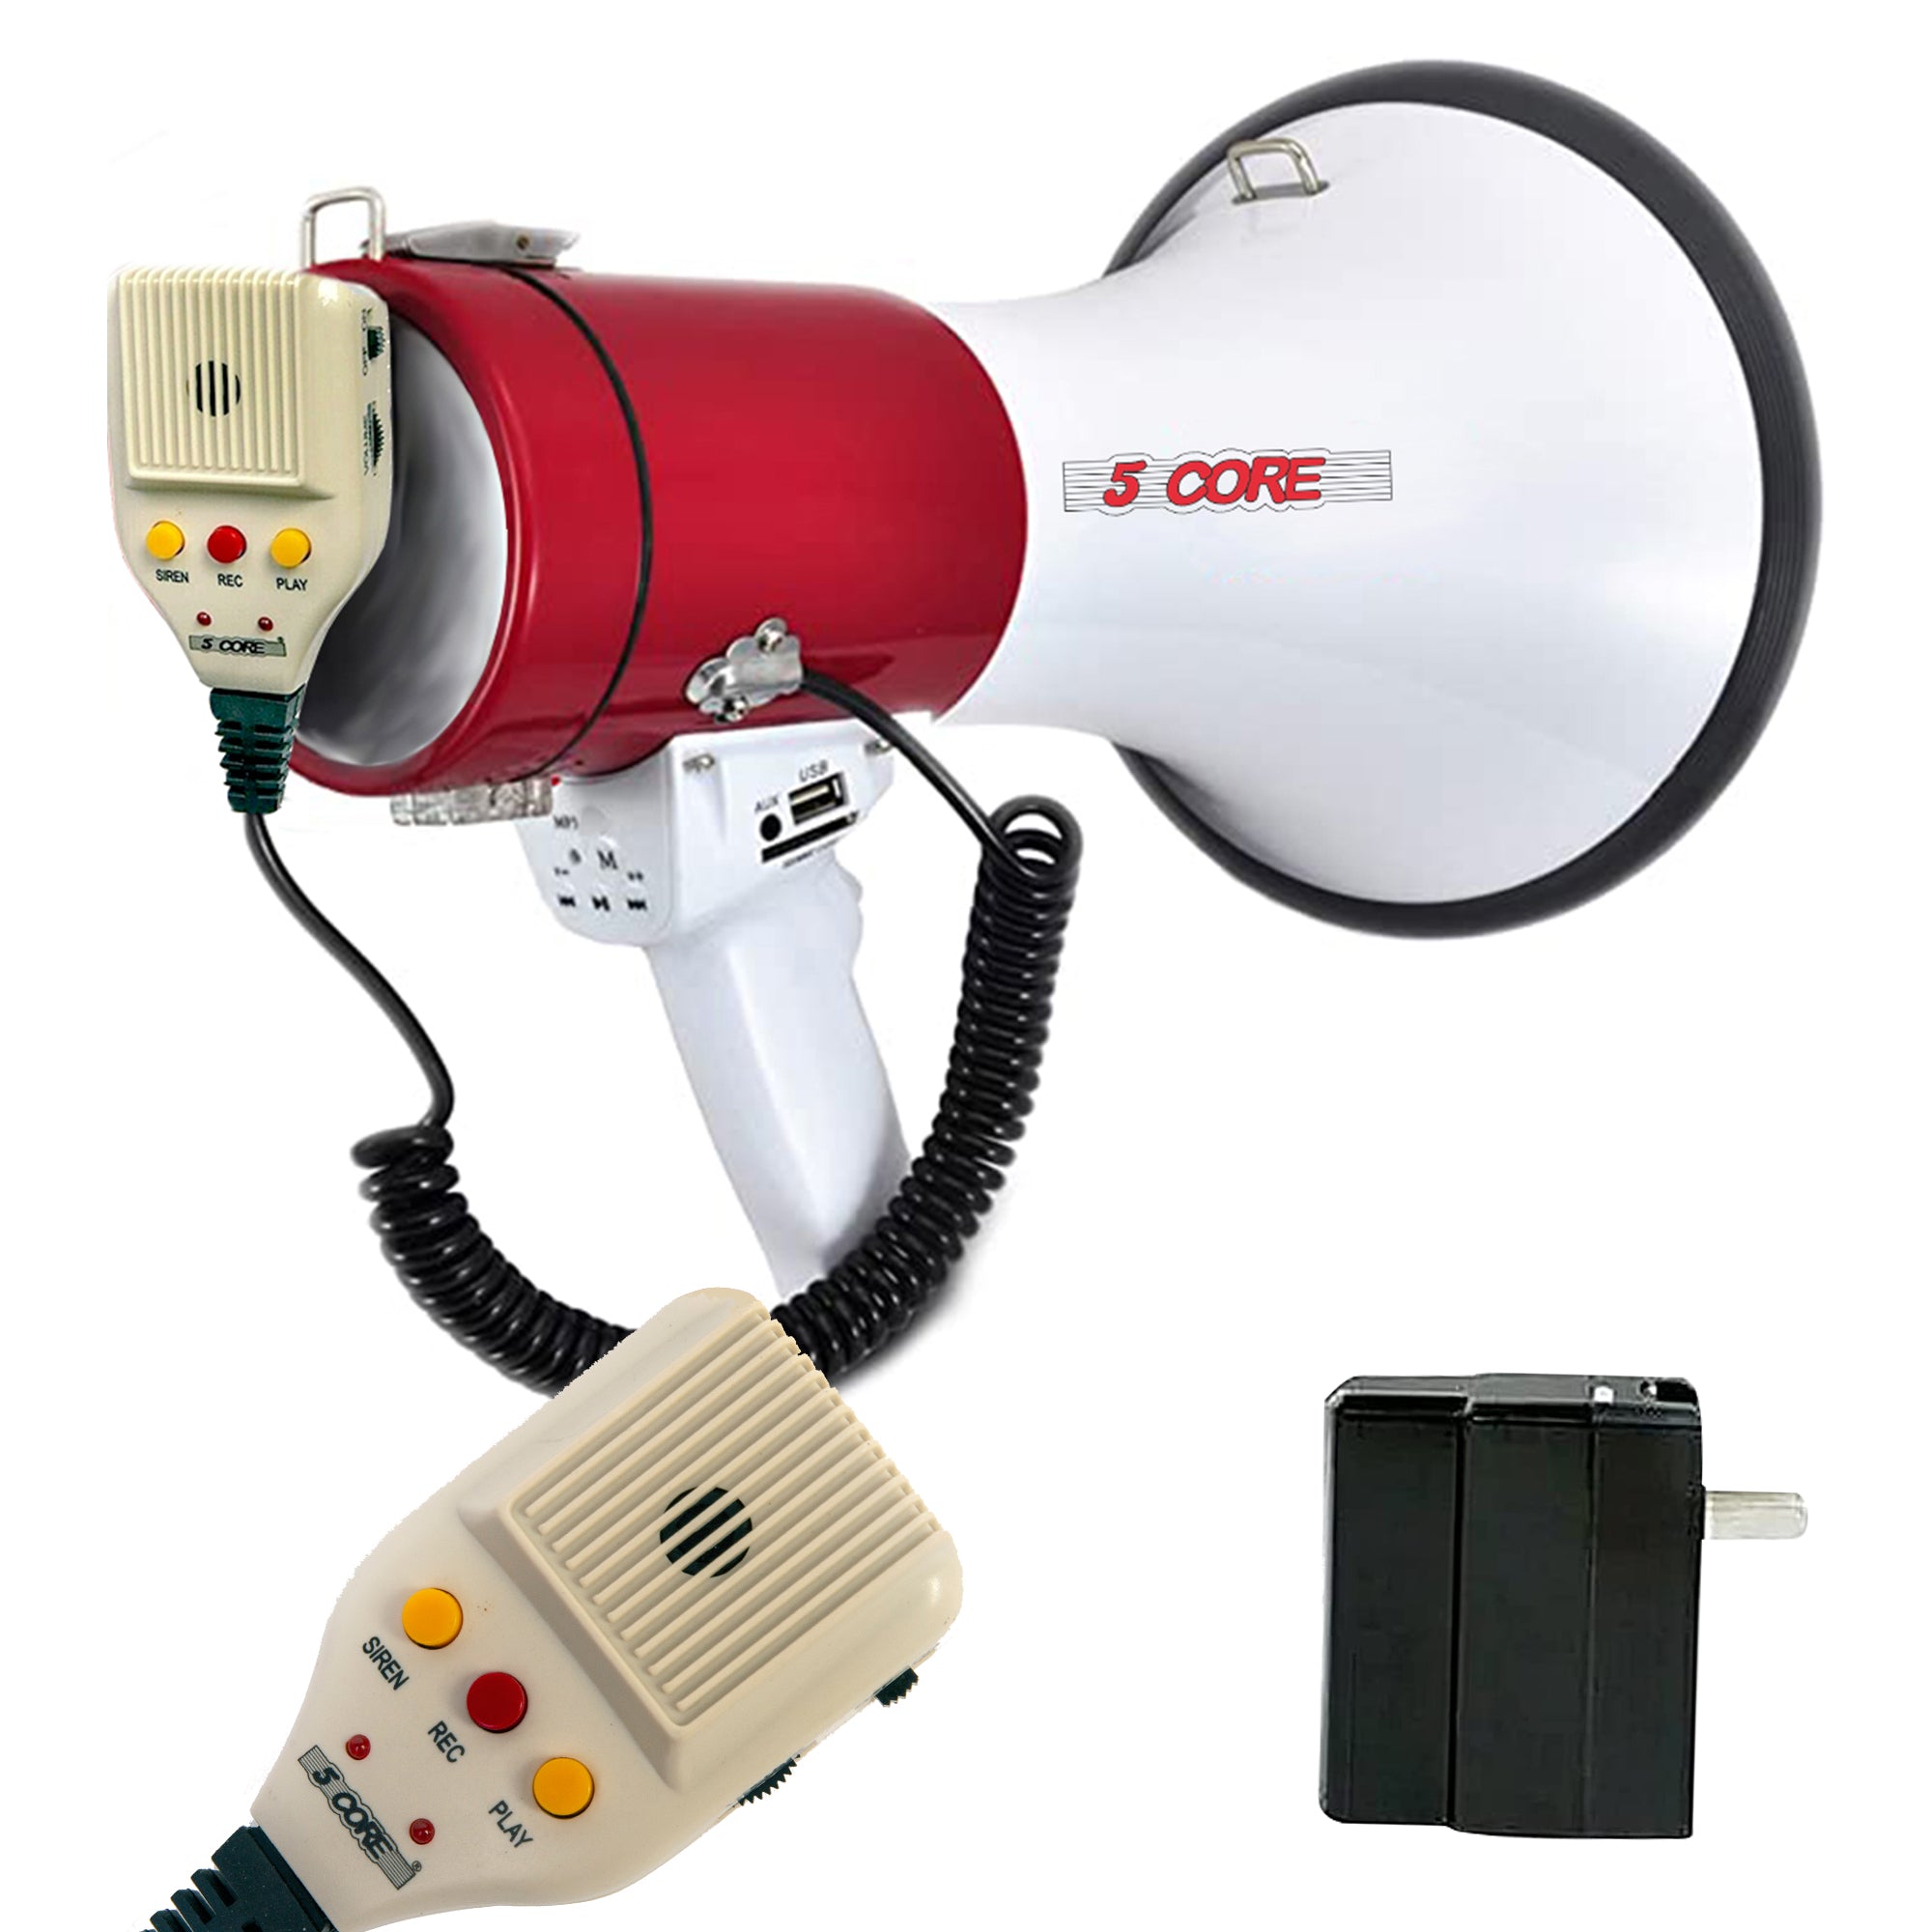 5 Core Megaphone Bull Horn 50W Siren Noise Maker Professional Bullhorn Speaker Rechargeable w REC USB SD Card Volume Control